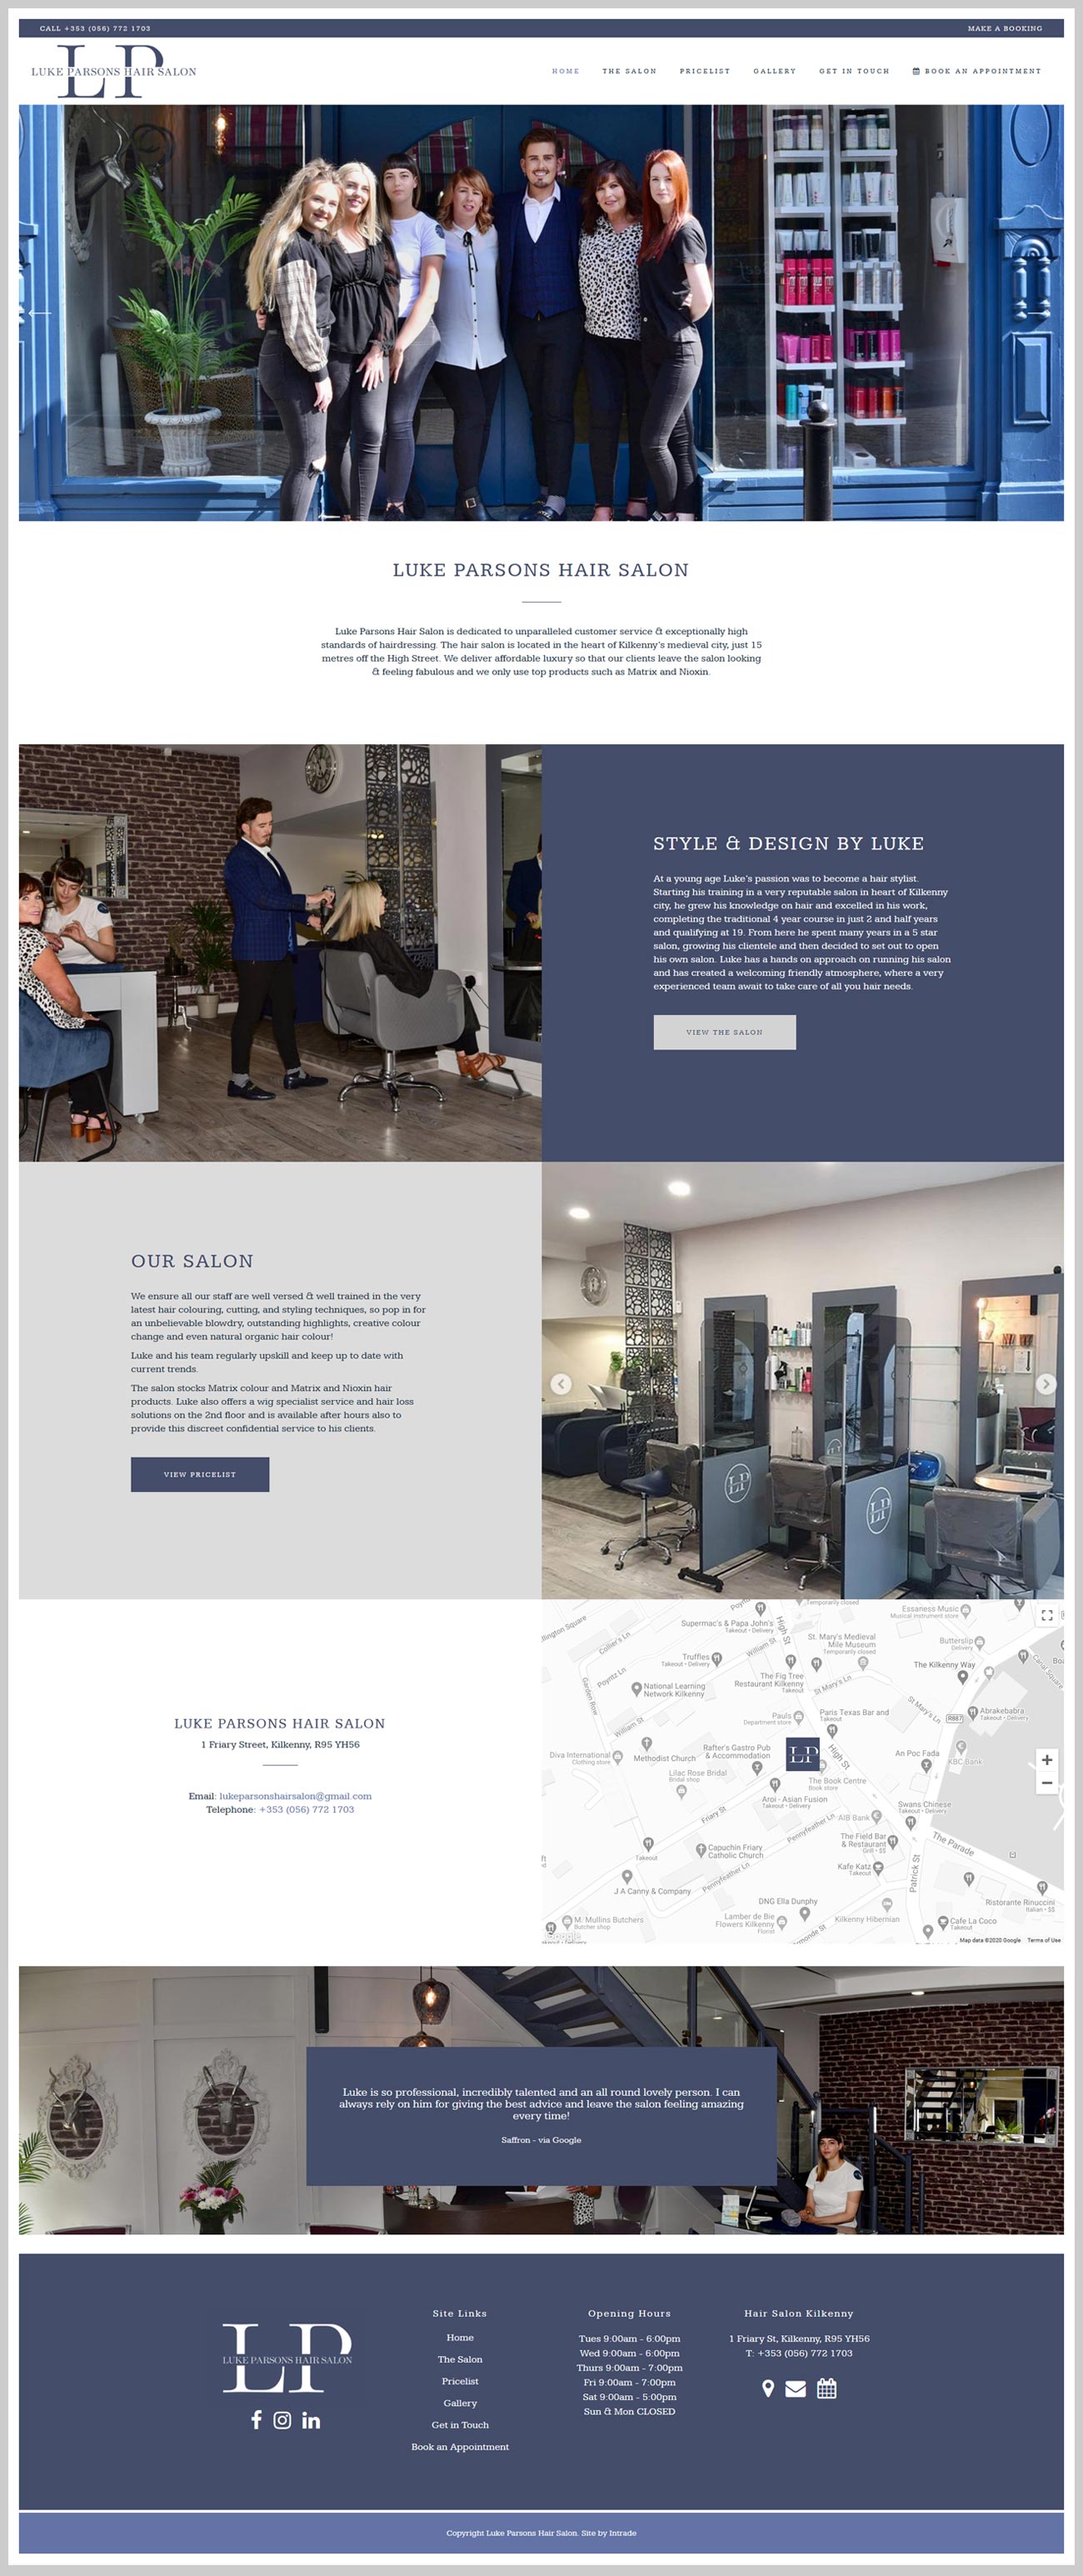 Luke Parsons Hair Salon - Intrade Solutions Website Design Kilkenny